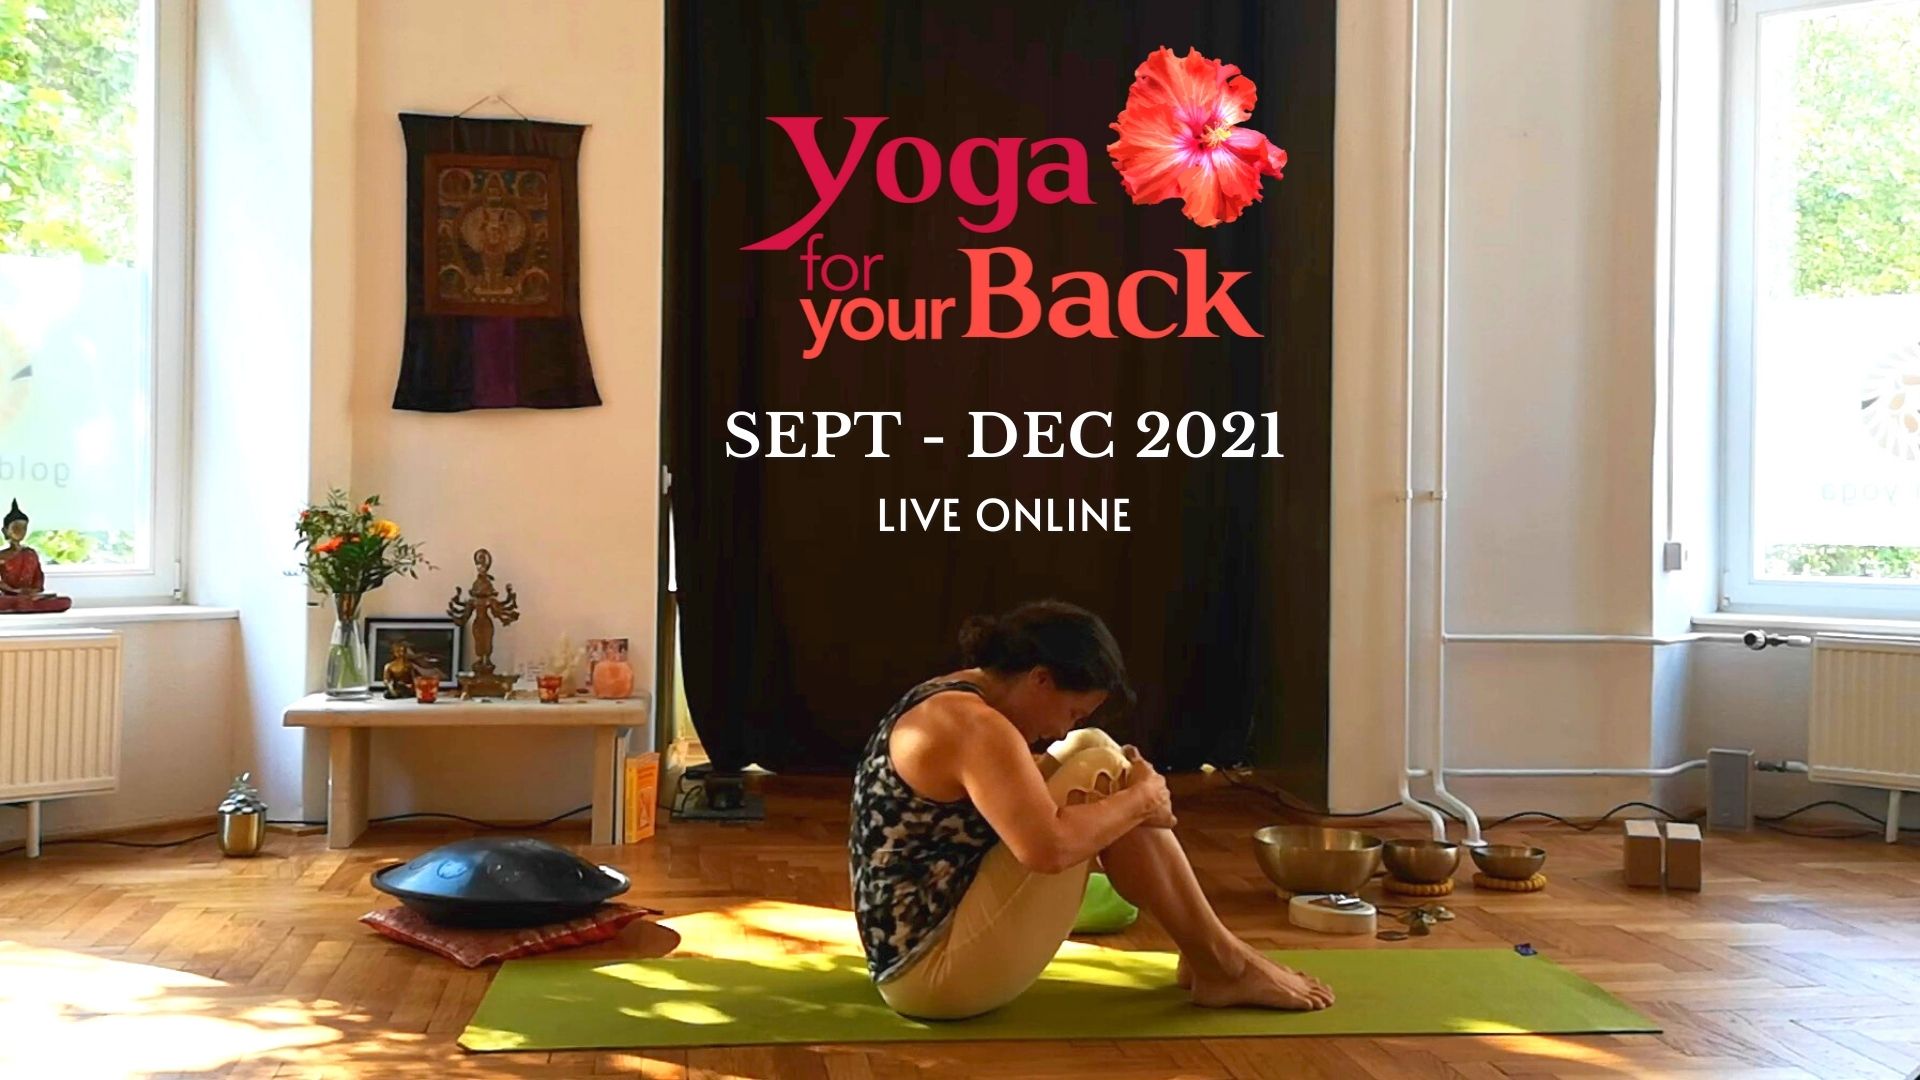 Yoga for Back pain yoga online